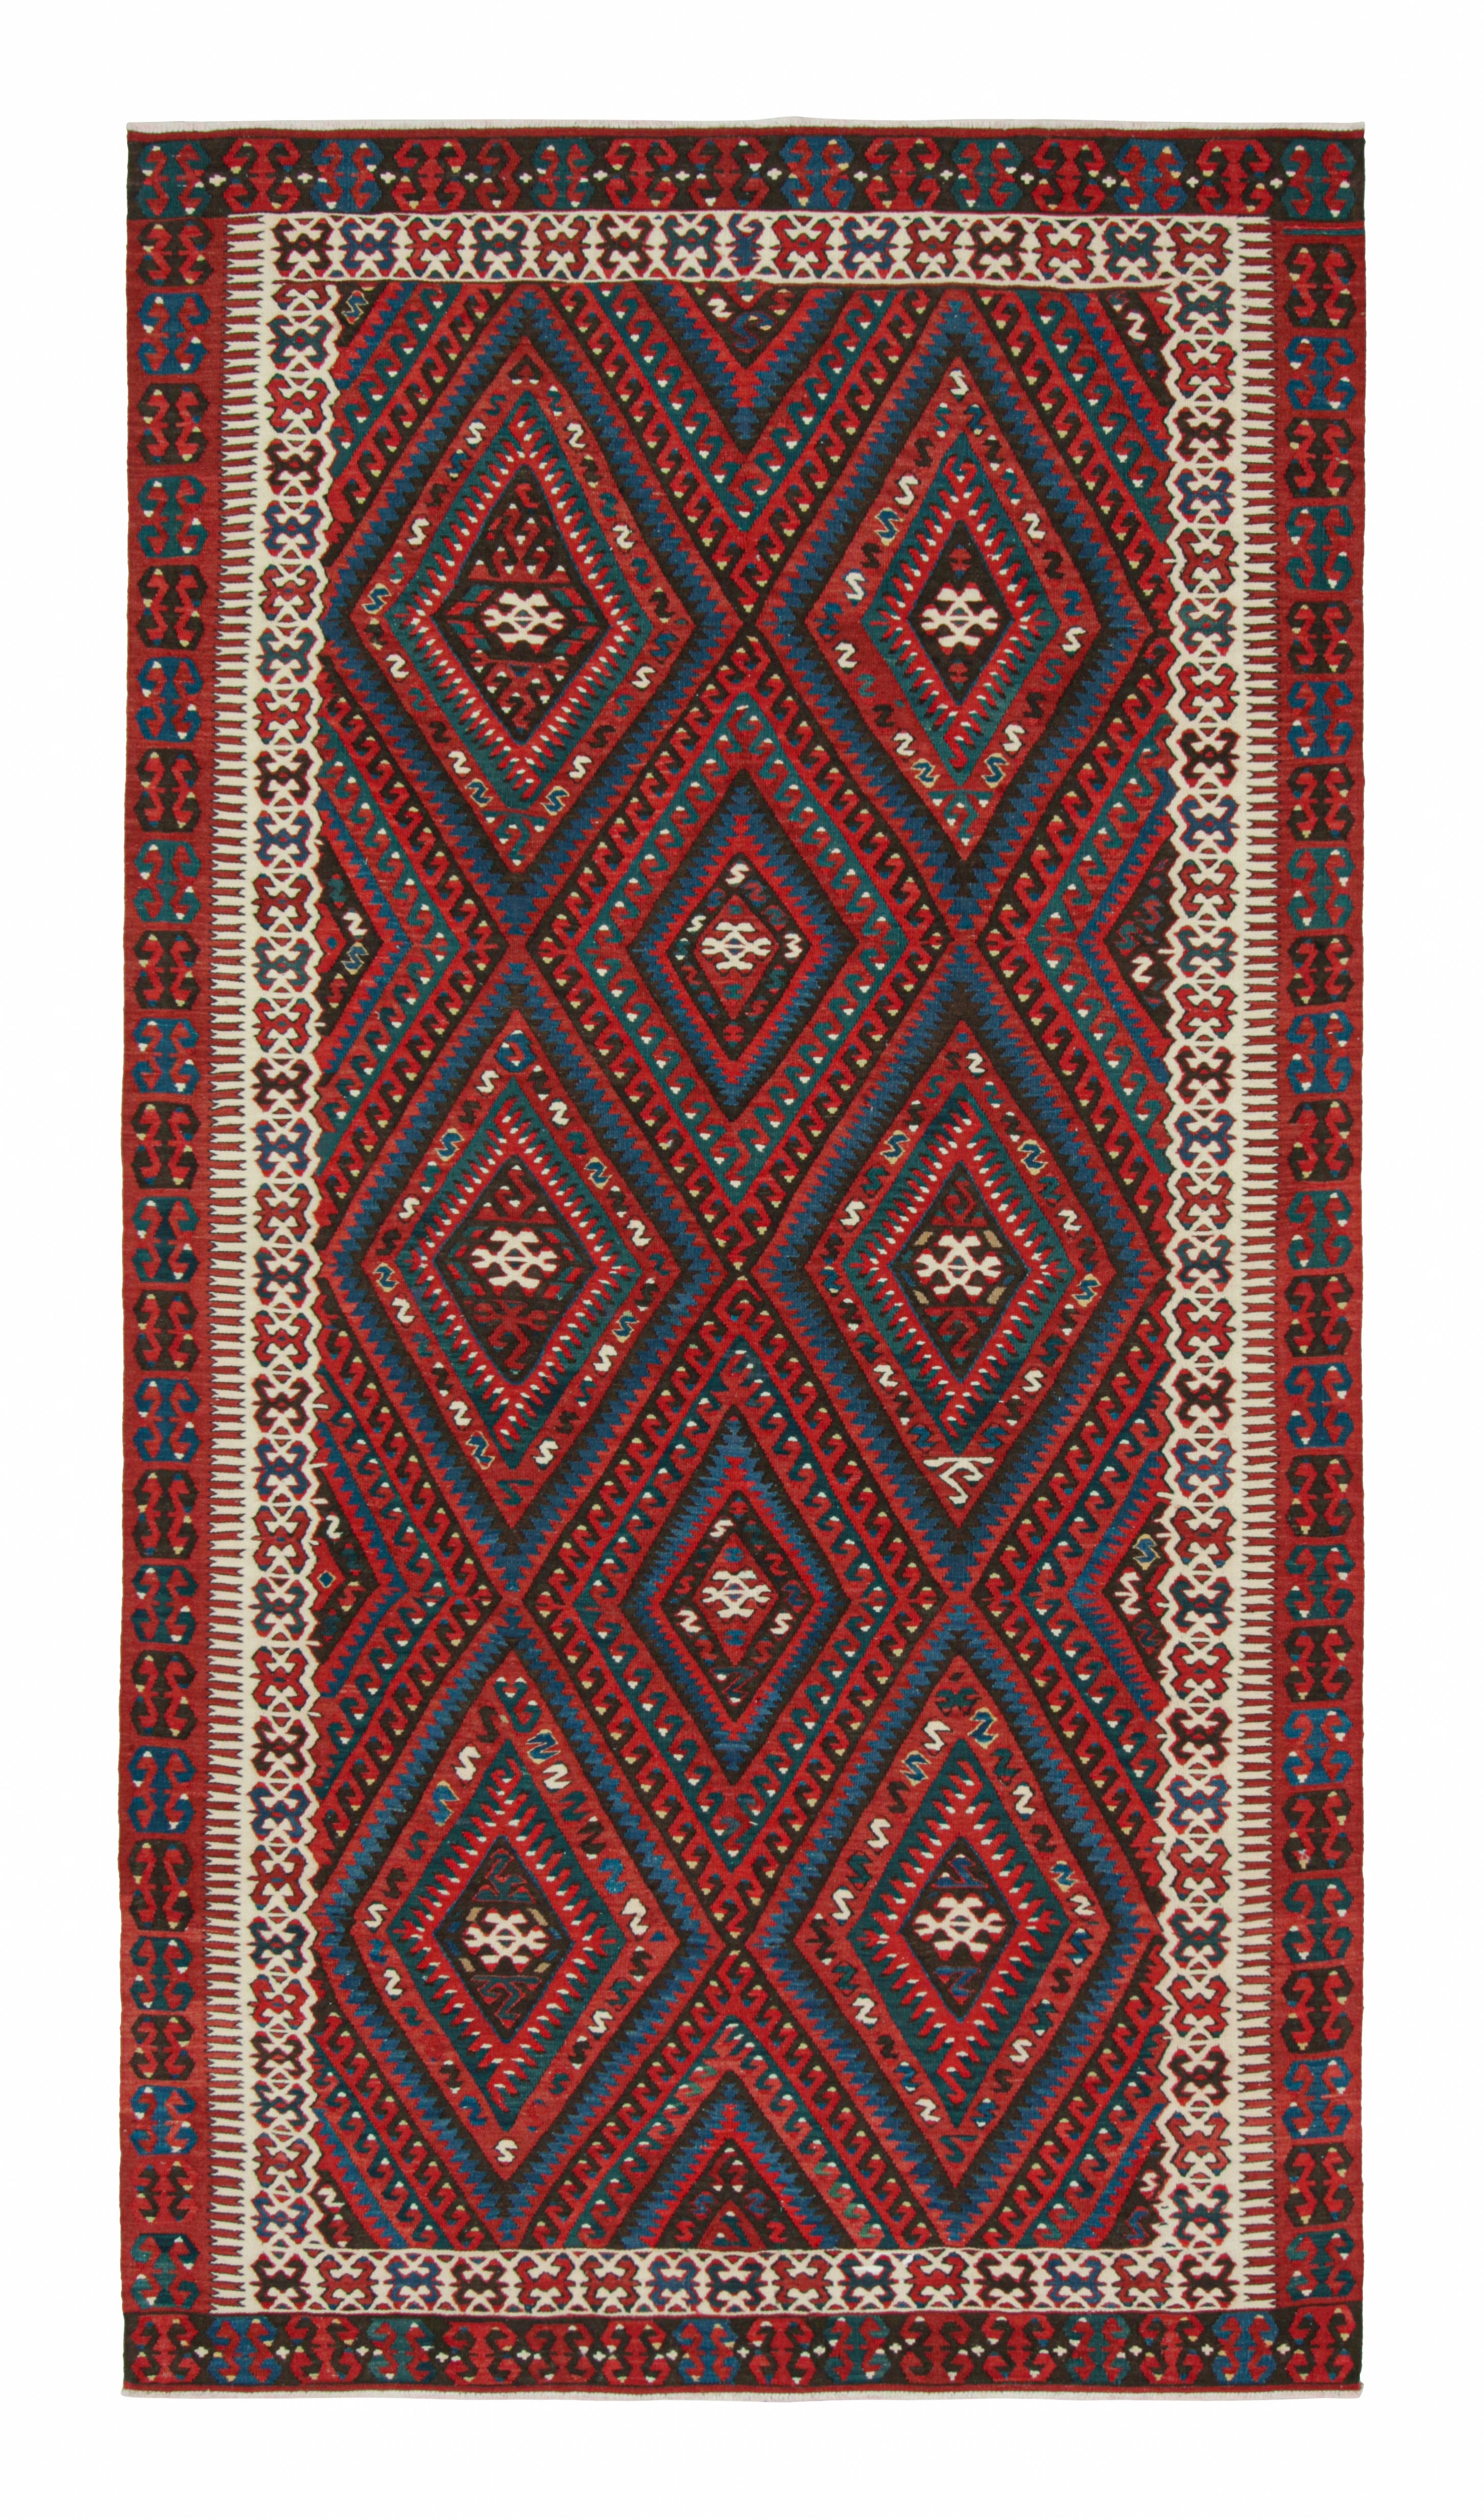 Vintage Midcentury Fethiye Diamond Tribal Red Blue Wool Kilim Rug by Rug & Kilim